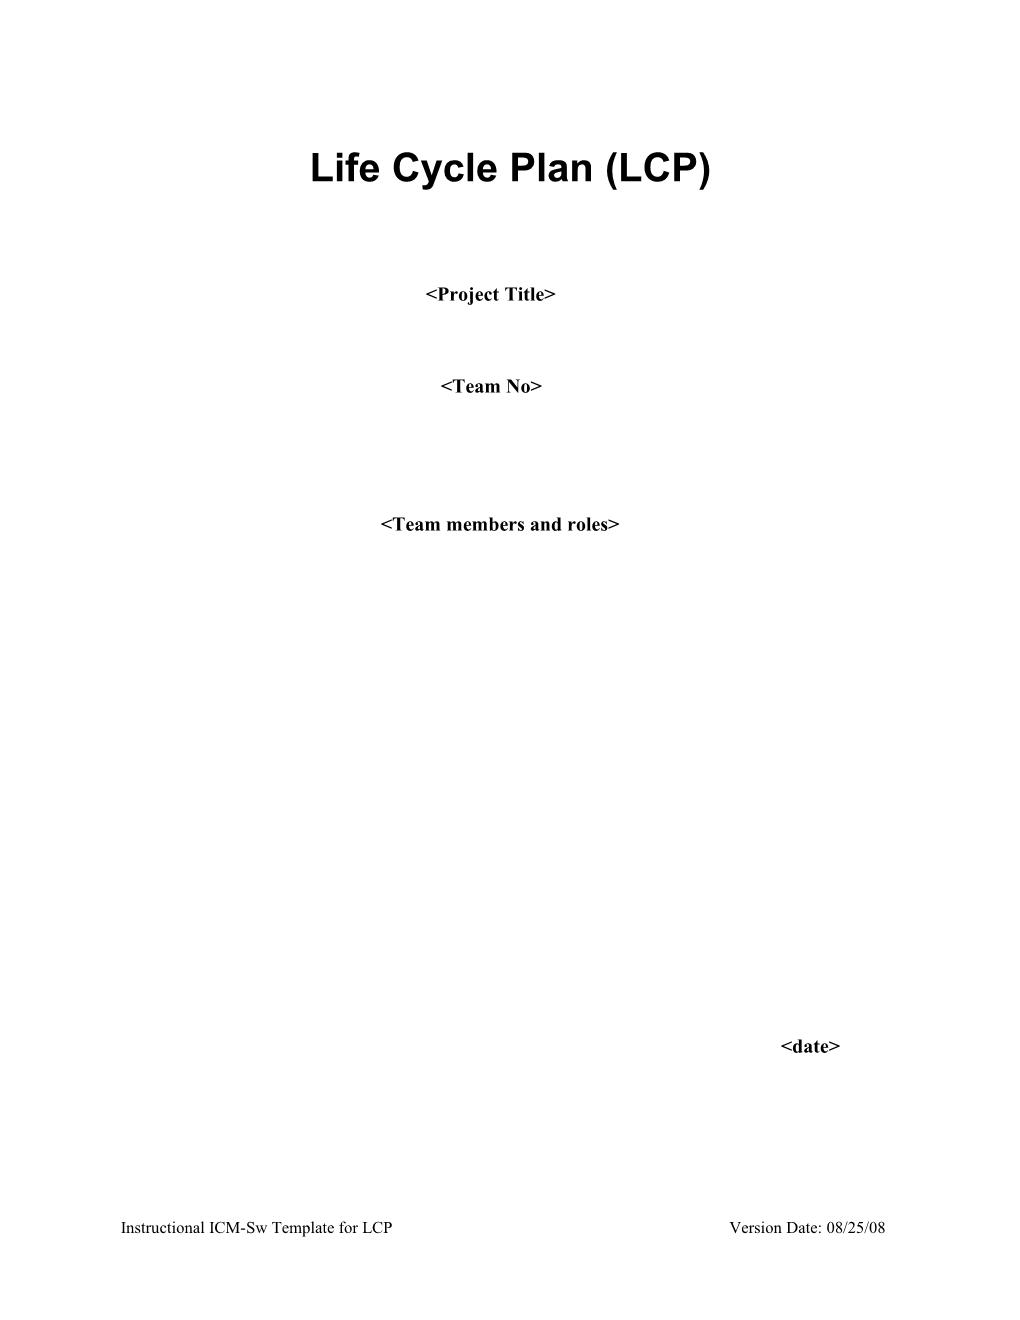 Life Cycle Plan (LCP) Templateversion No X.X